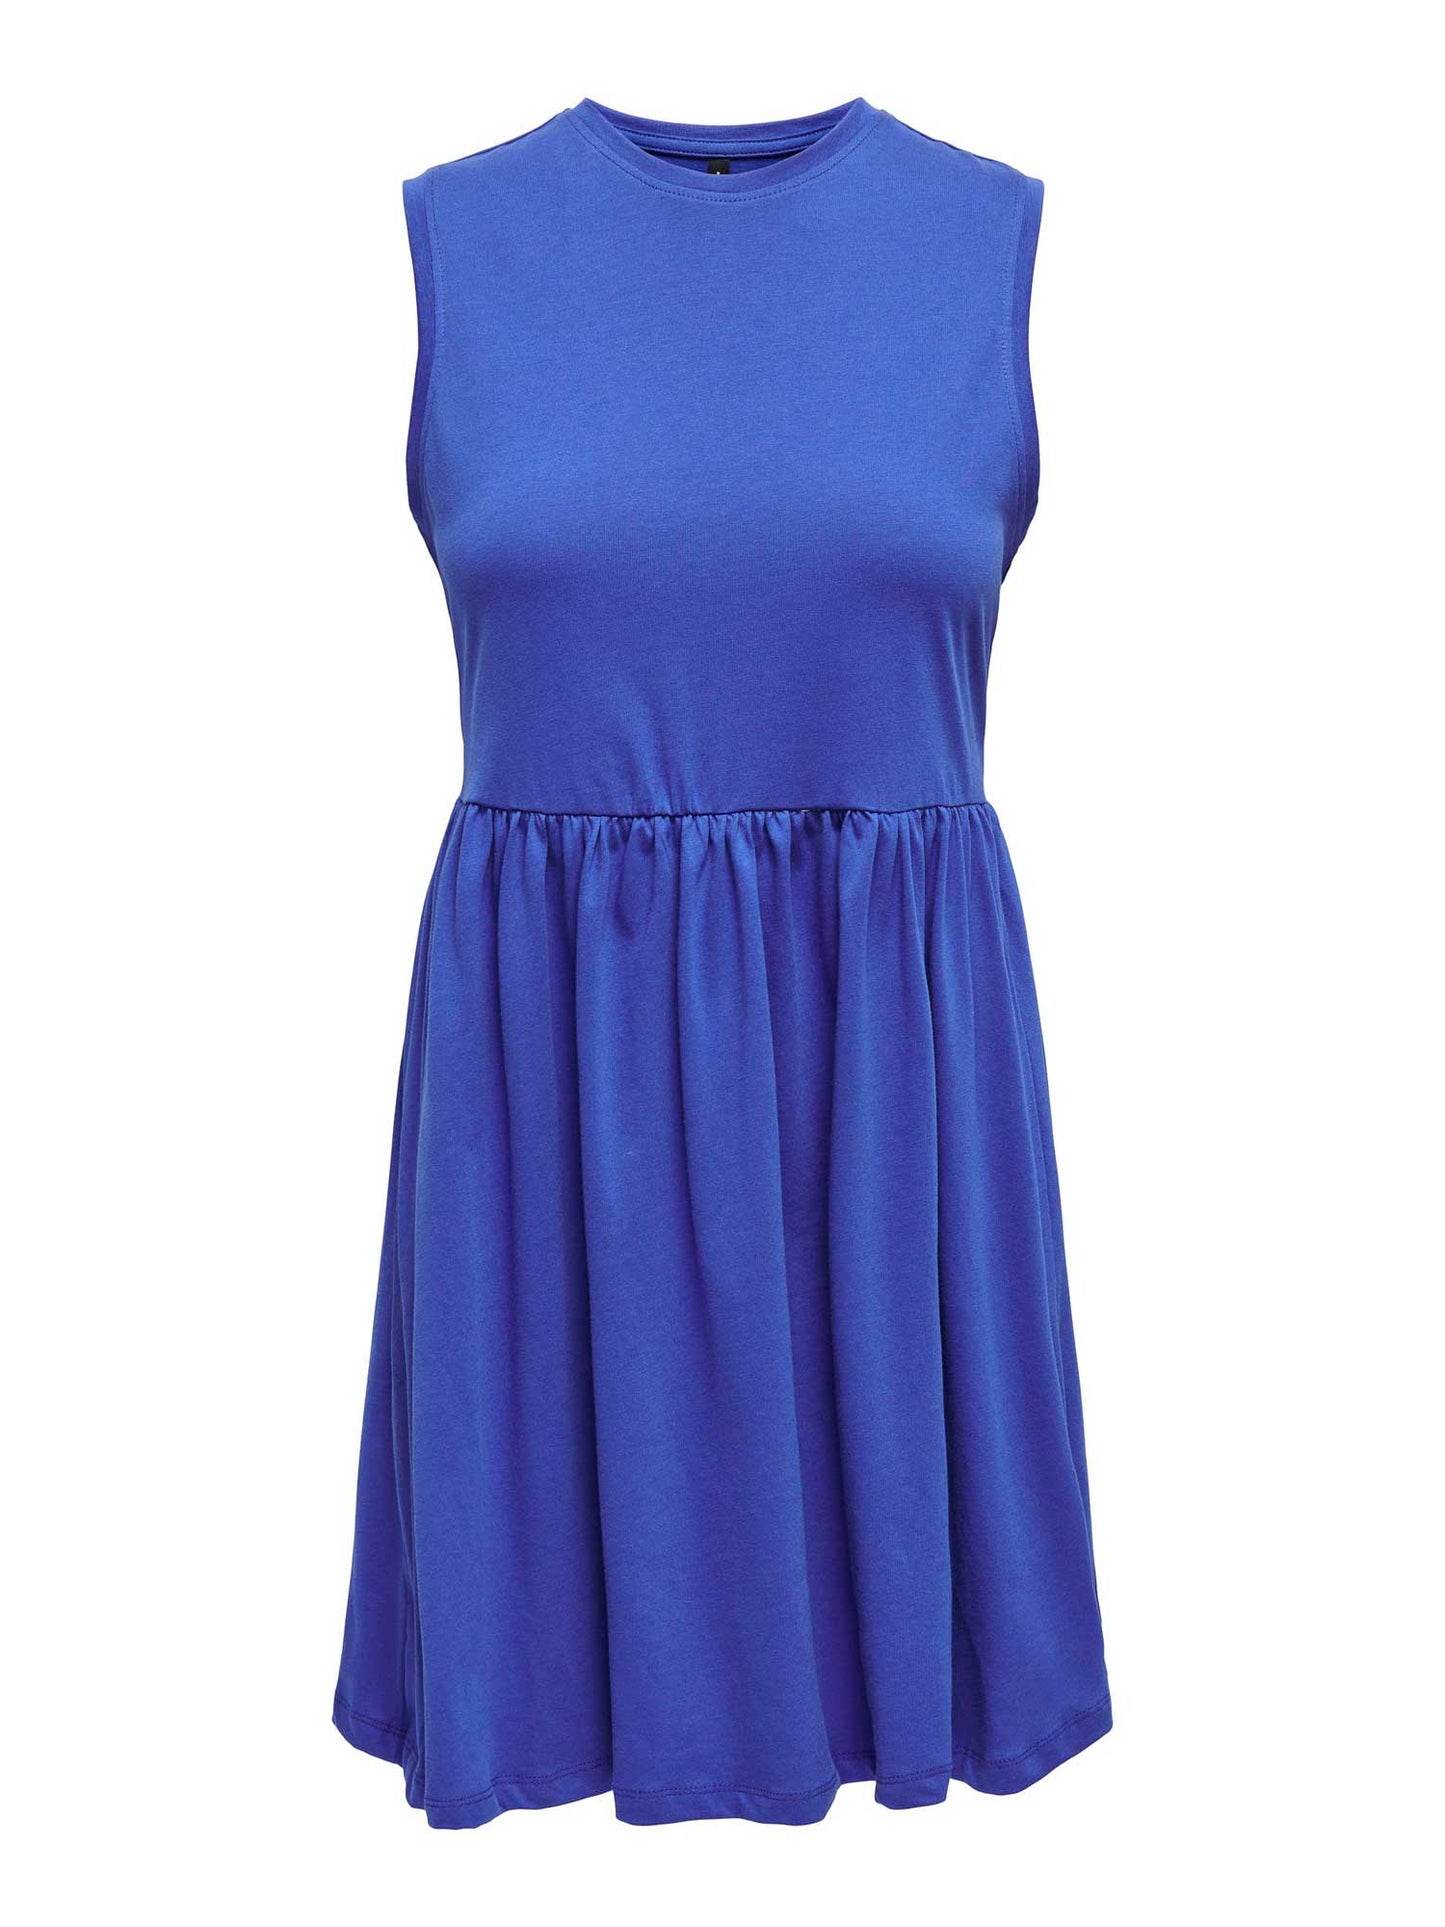 ONLY Dazzling Blue May Peplum Dress